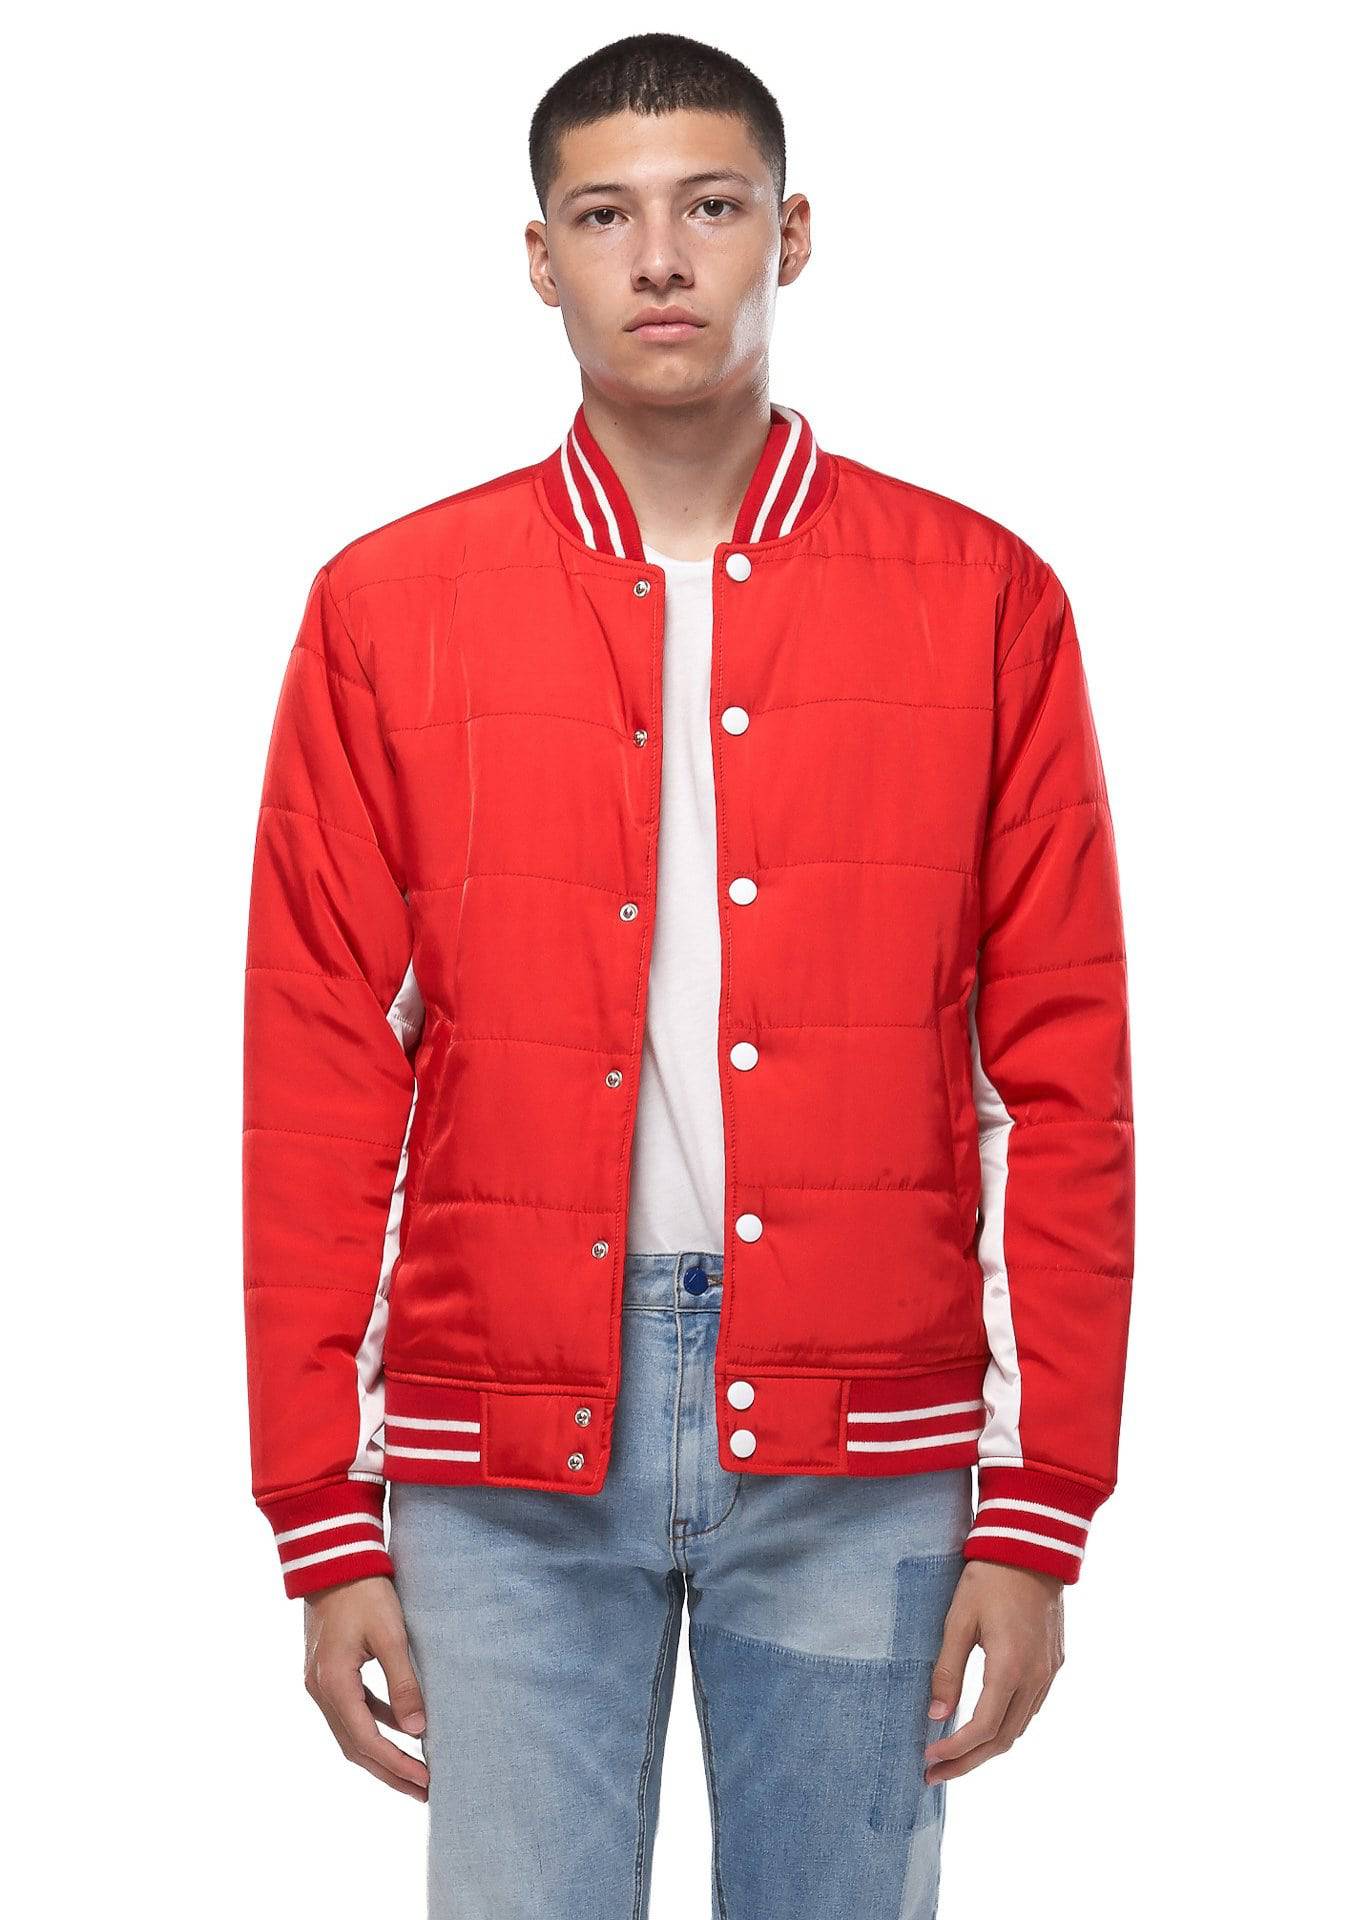 Konus Men's Bomber Jacket in Red by Shop at Konus